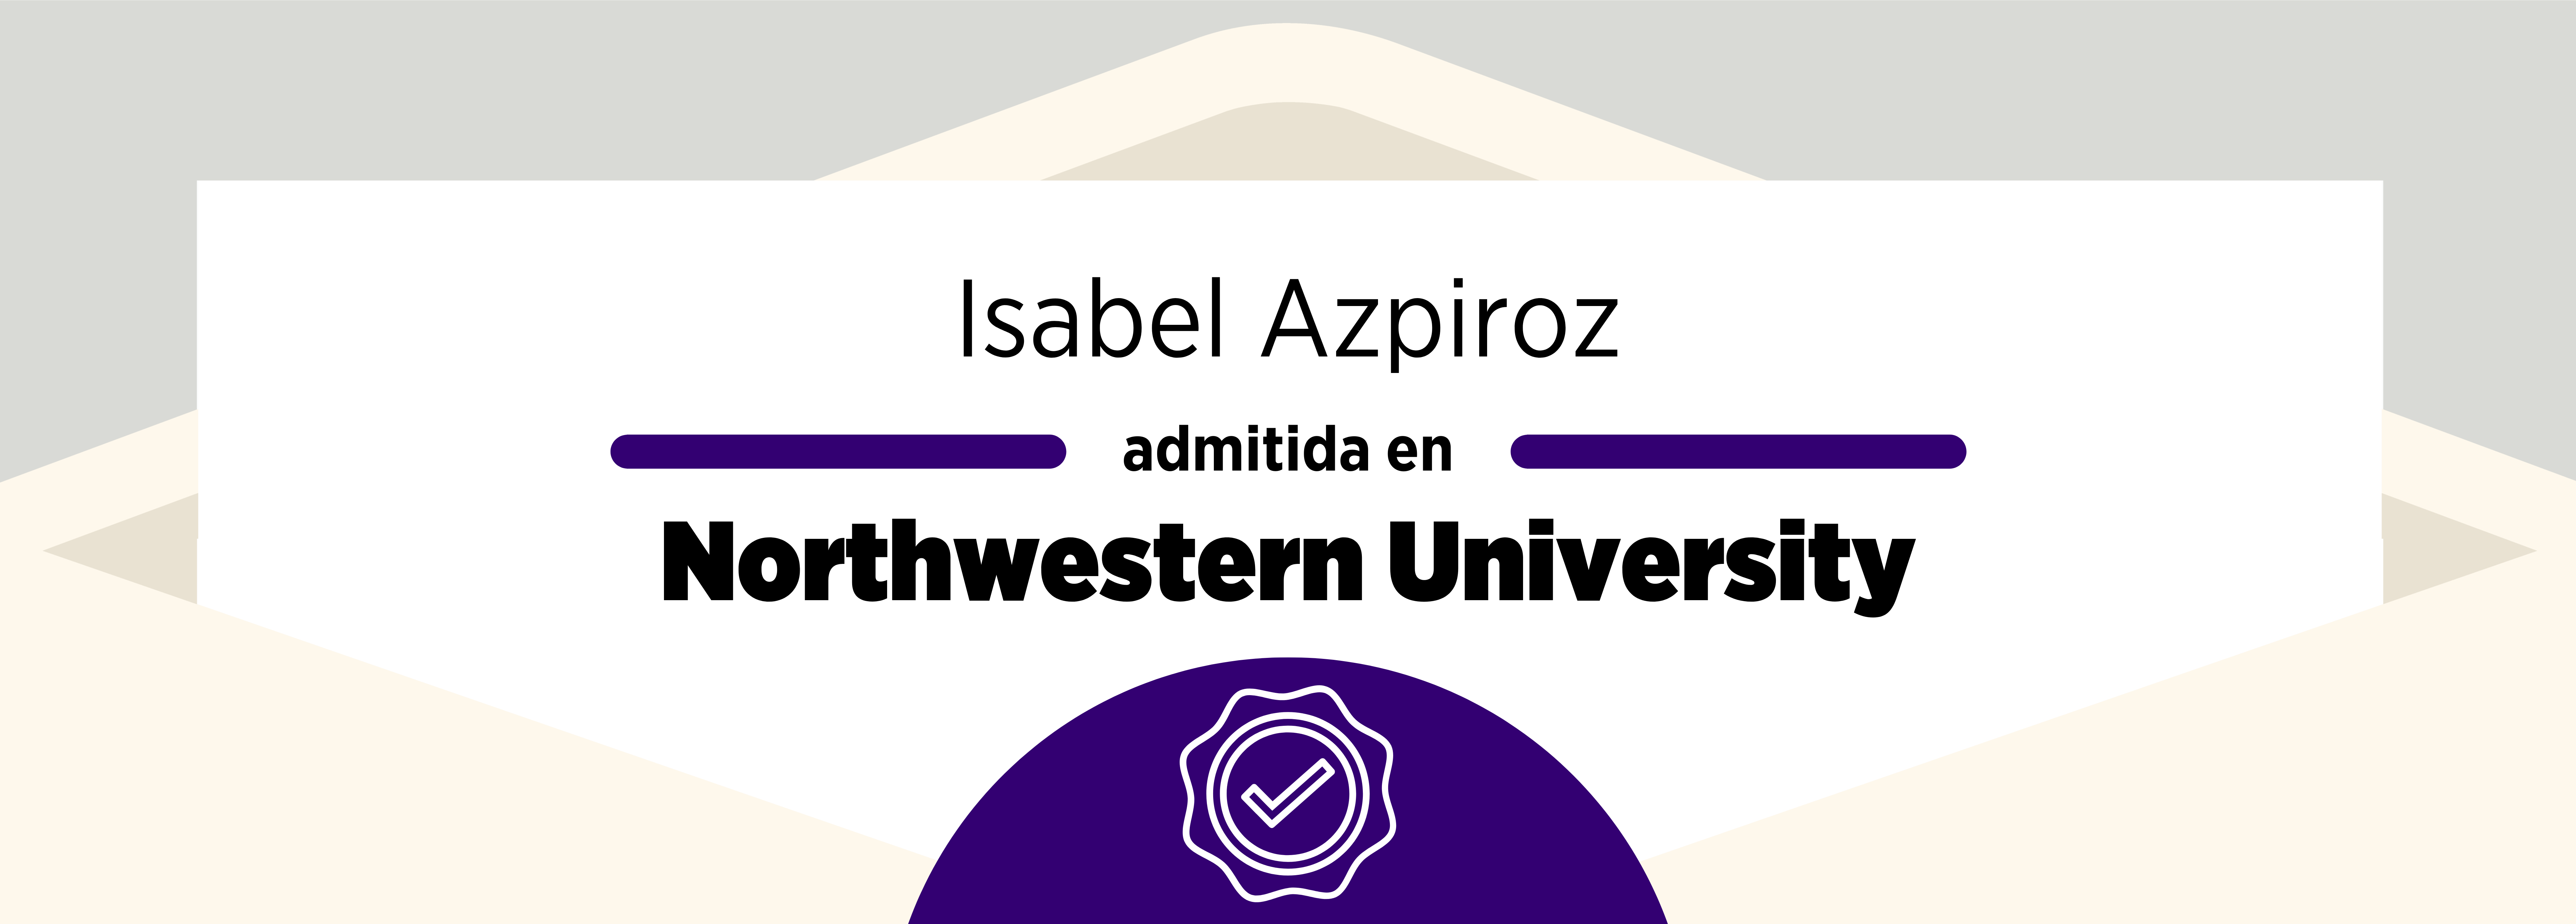 Admissions 2019: Isabel Azpiroz & Northwestern University